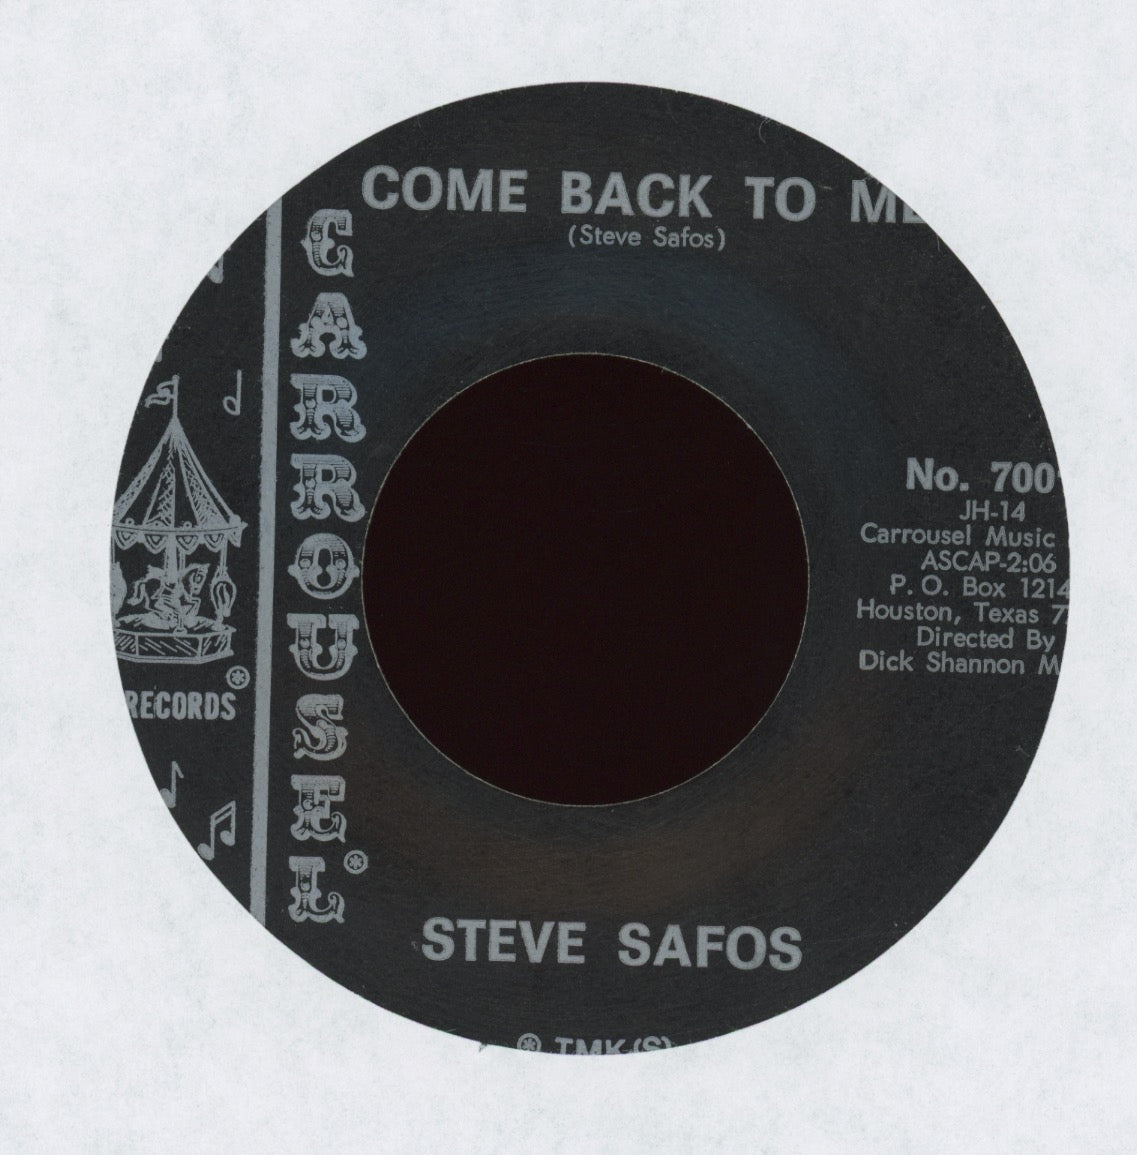 Steve Safos - I'm So Lonely on Carousel